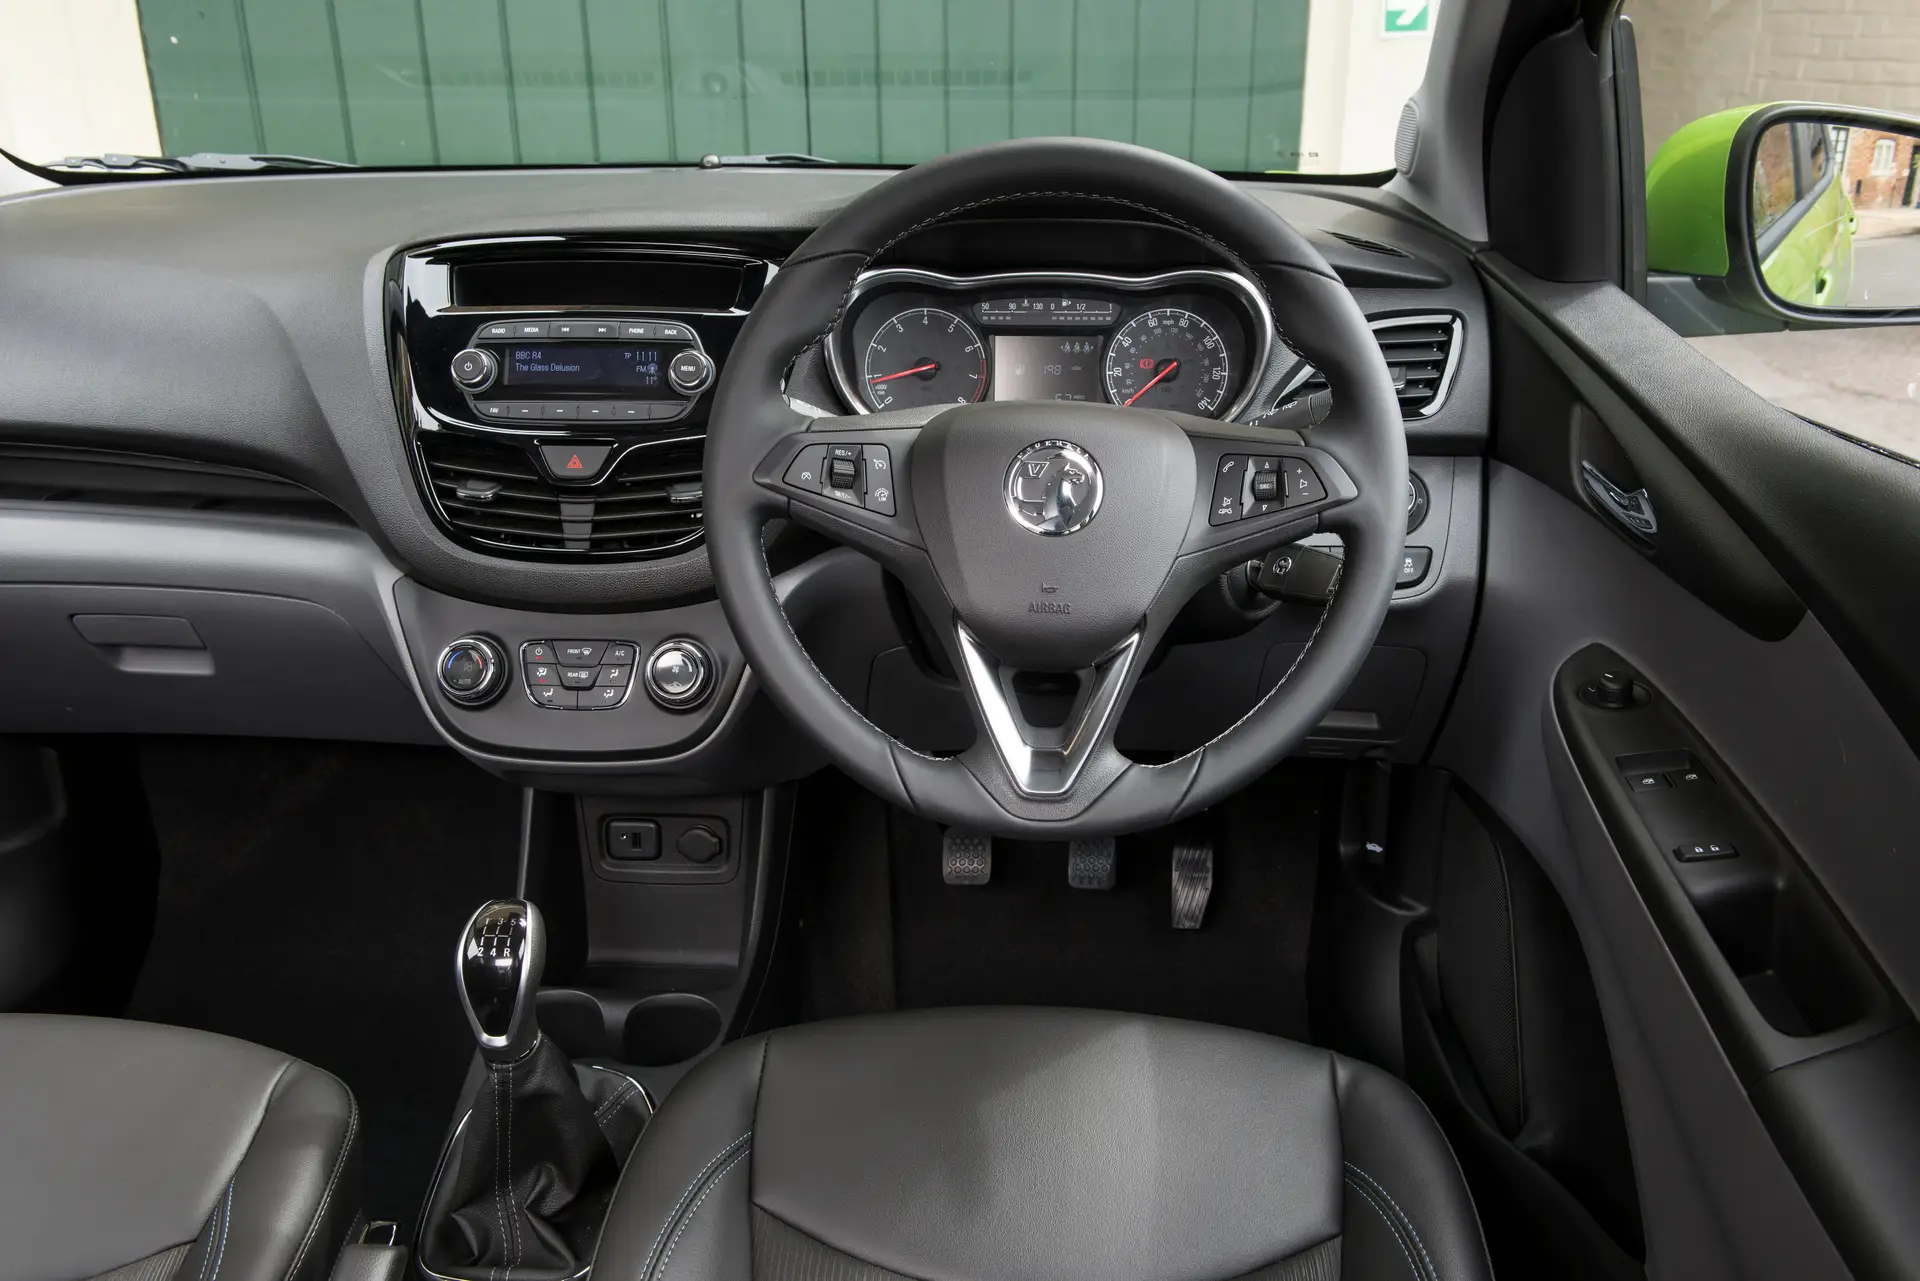 Vauxhall Viva Driver's Seat